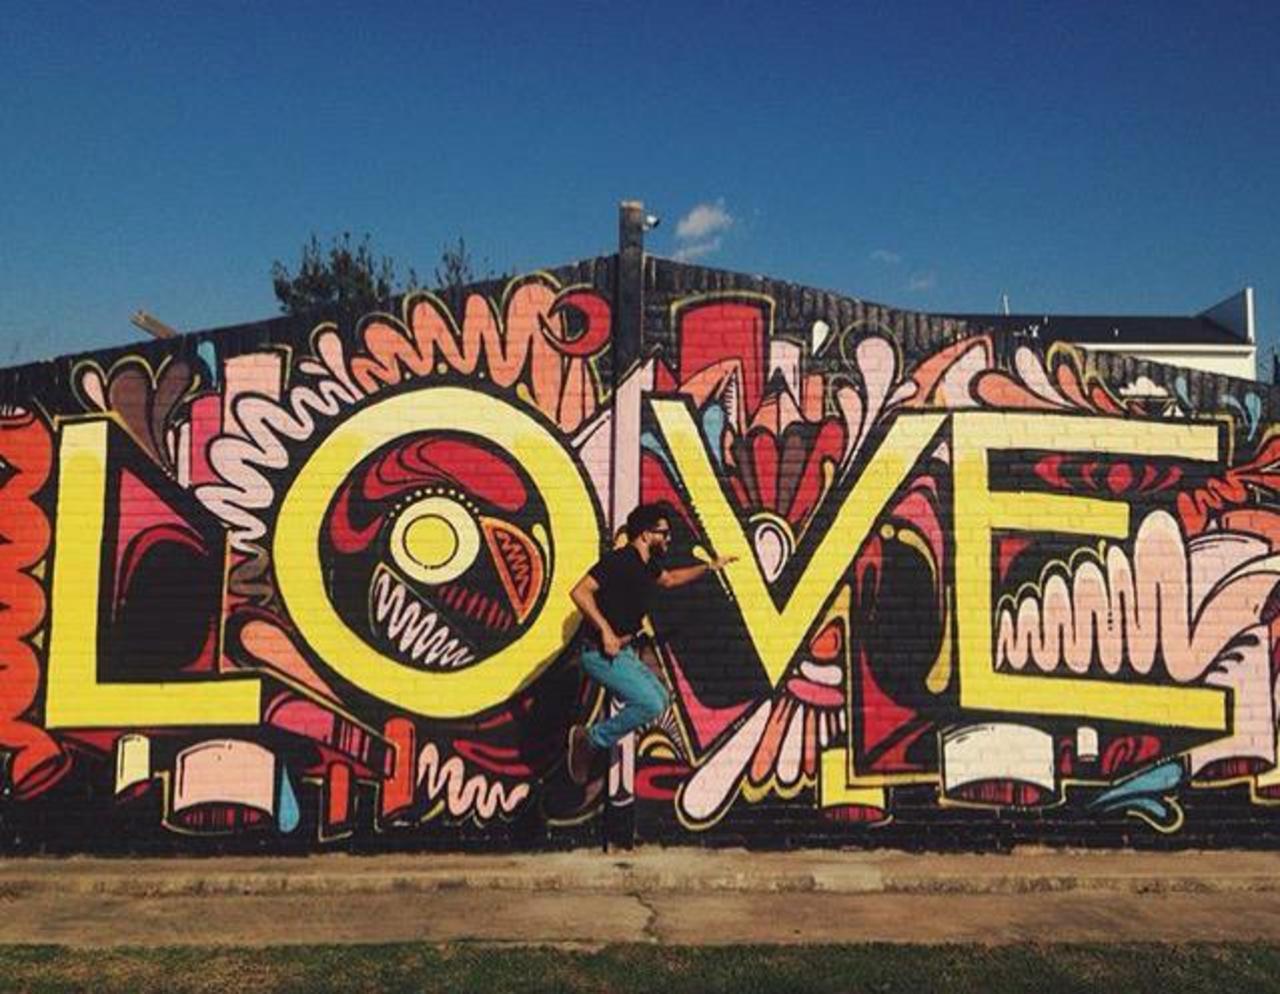 RT belilac "RT belilac "RT belilac "Love ❤️
Street Art by WileyArt

#art #graffiti #mural #streetart http://t.co/1qFfKLruyG"""